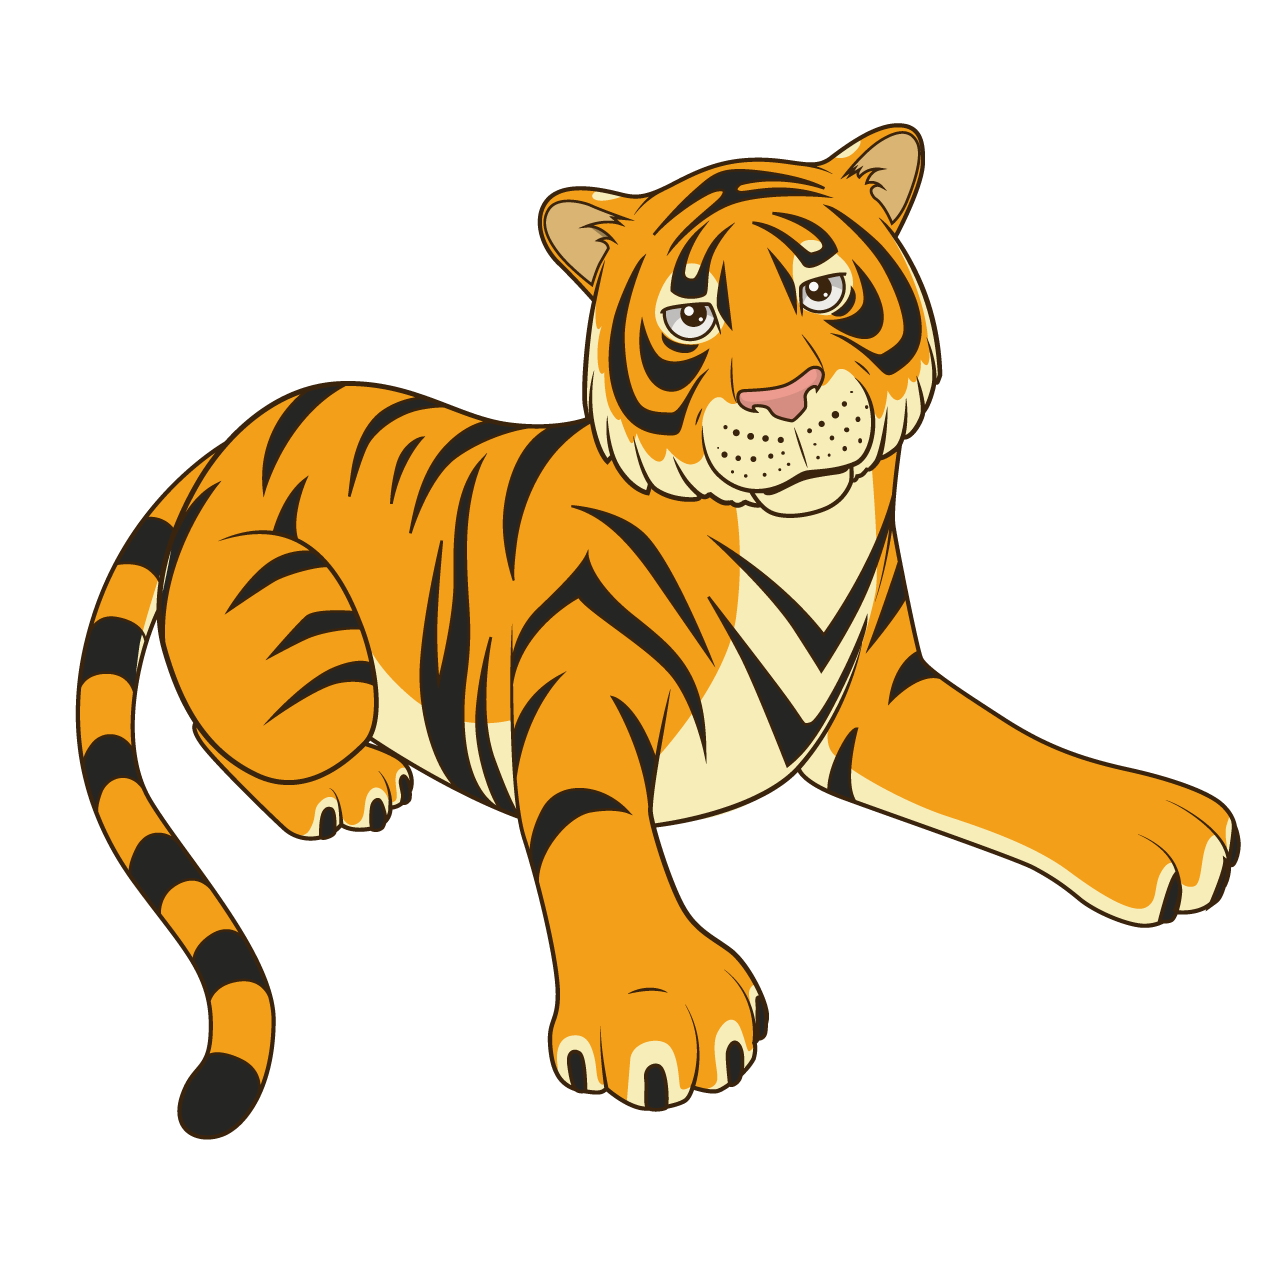 Картинки с символом года 2022 - Тигром